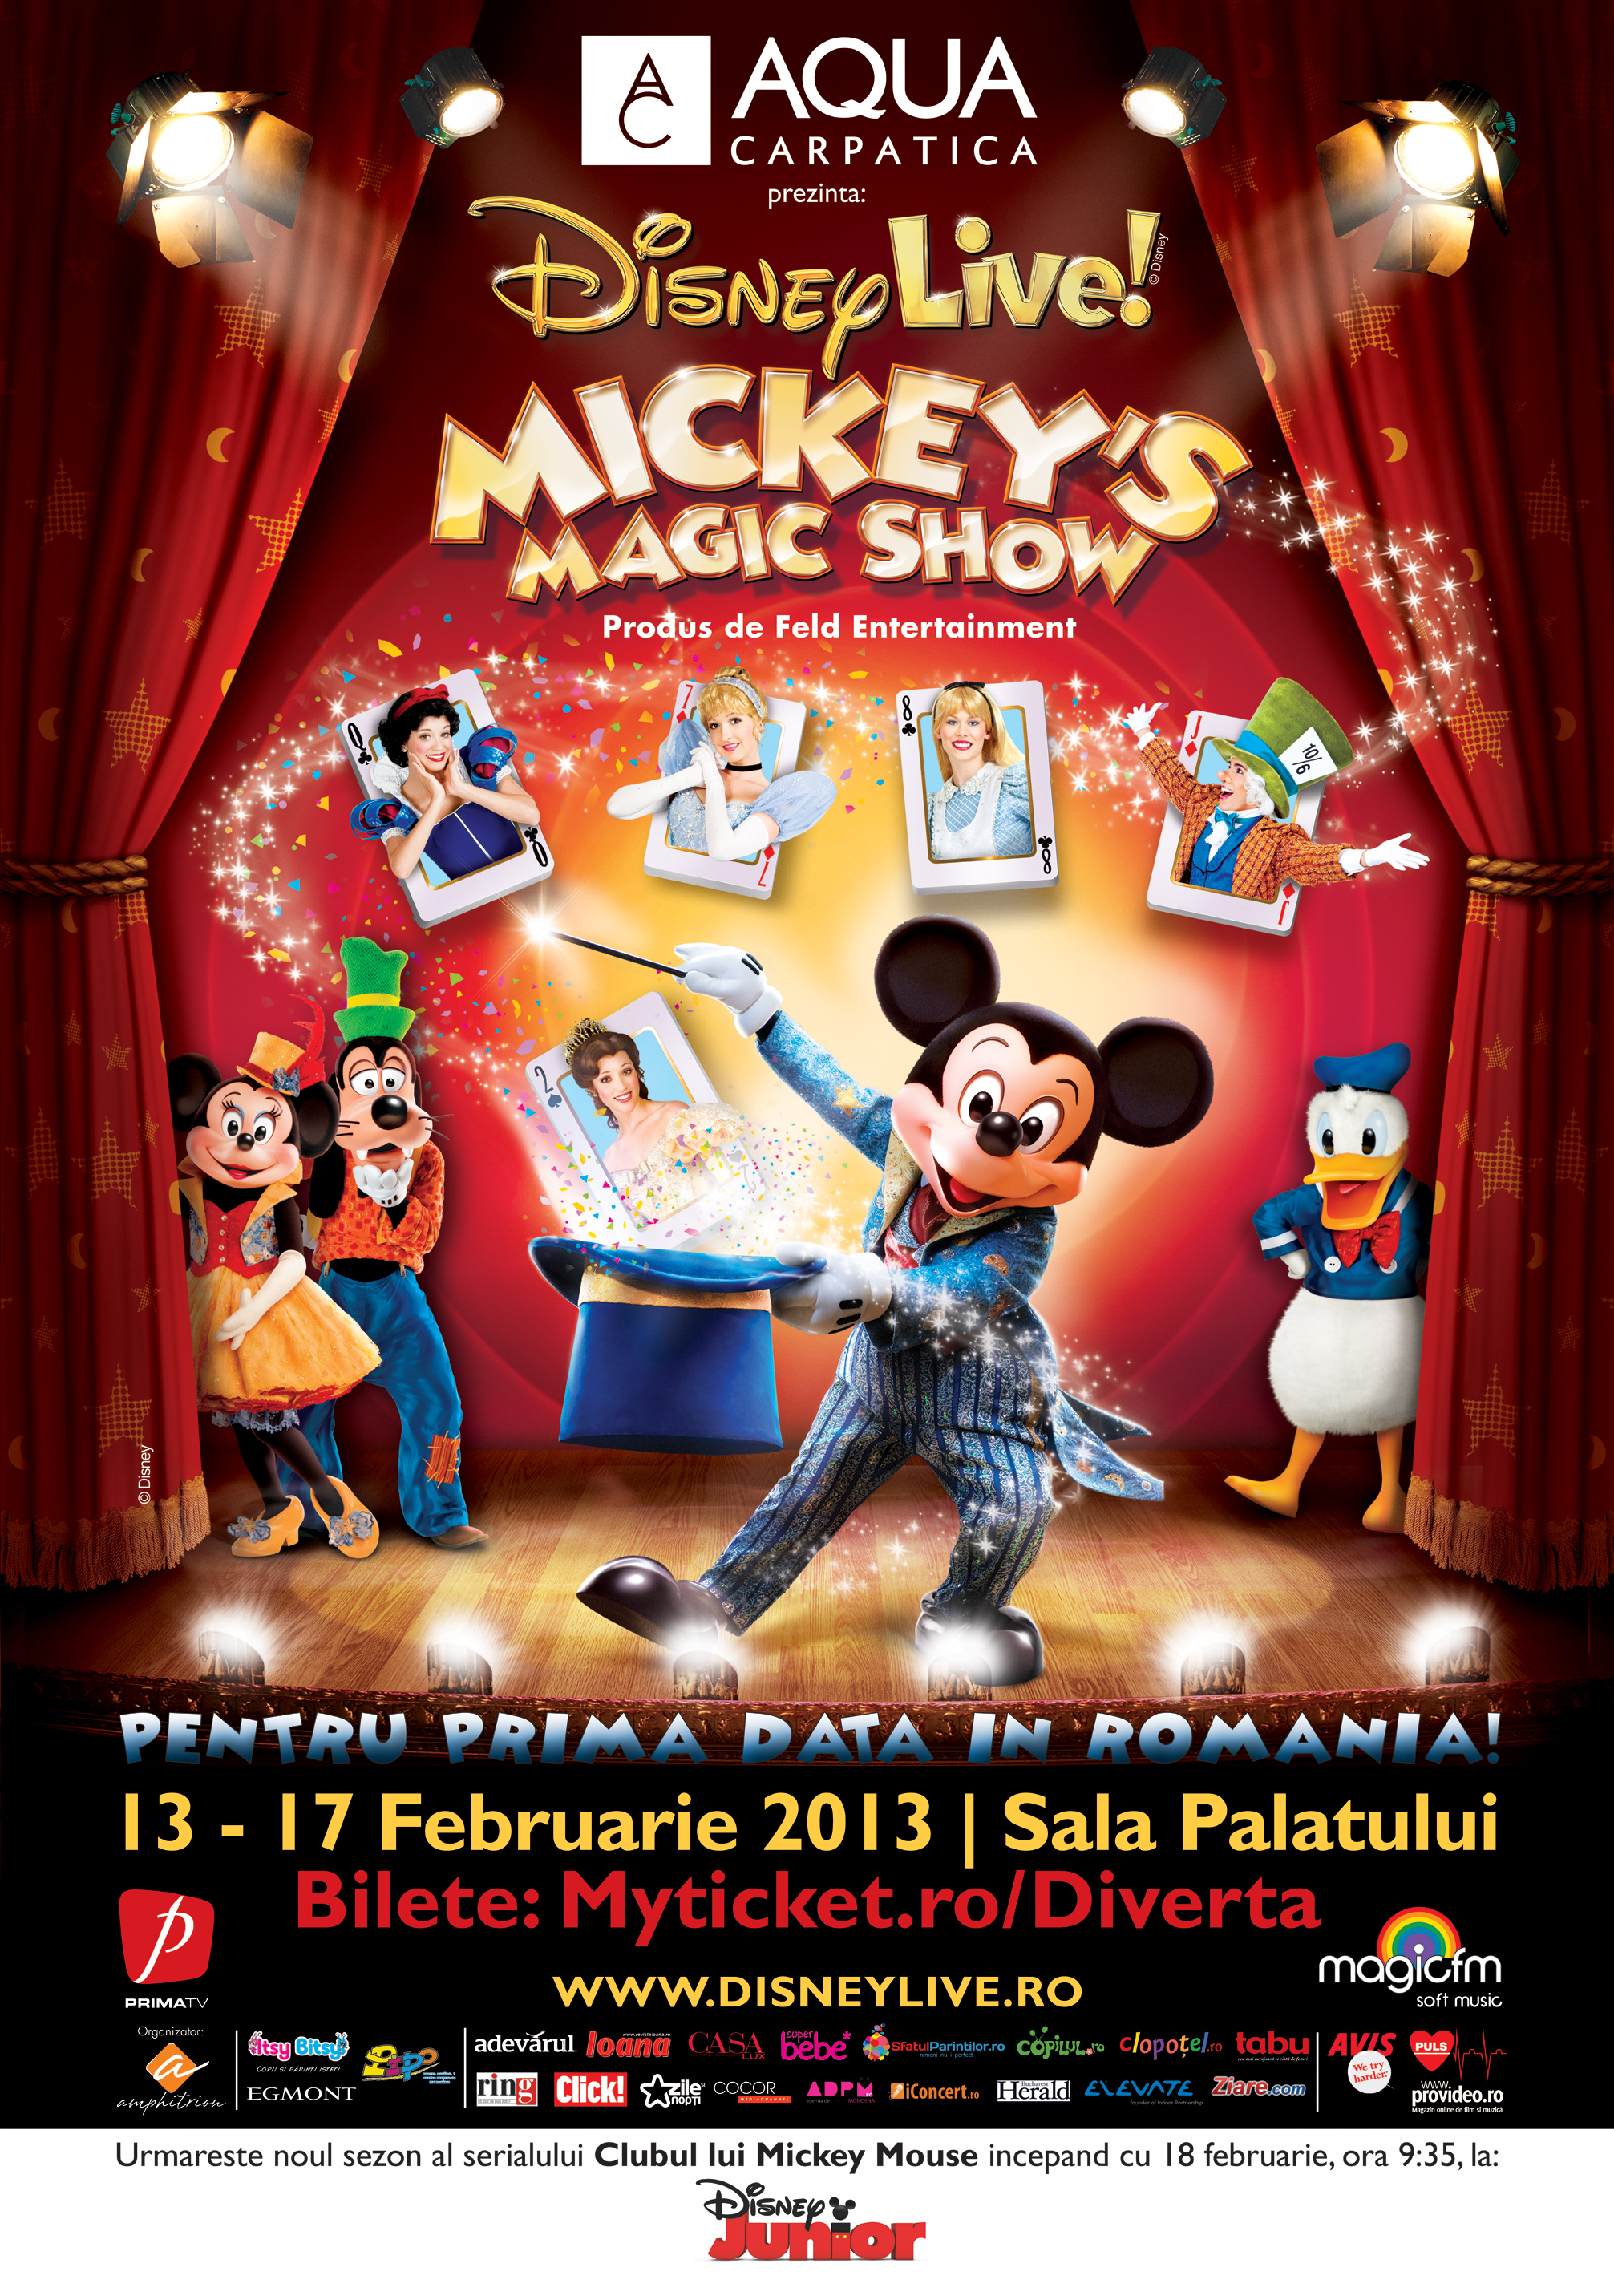 Disney Live! prezinta Mickey’s Magic Show